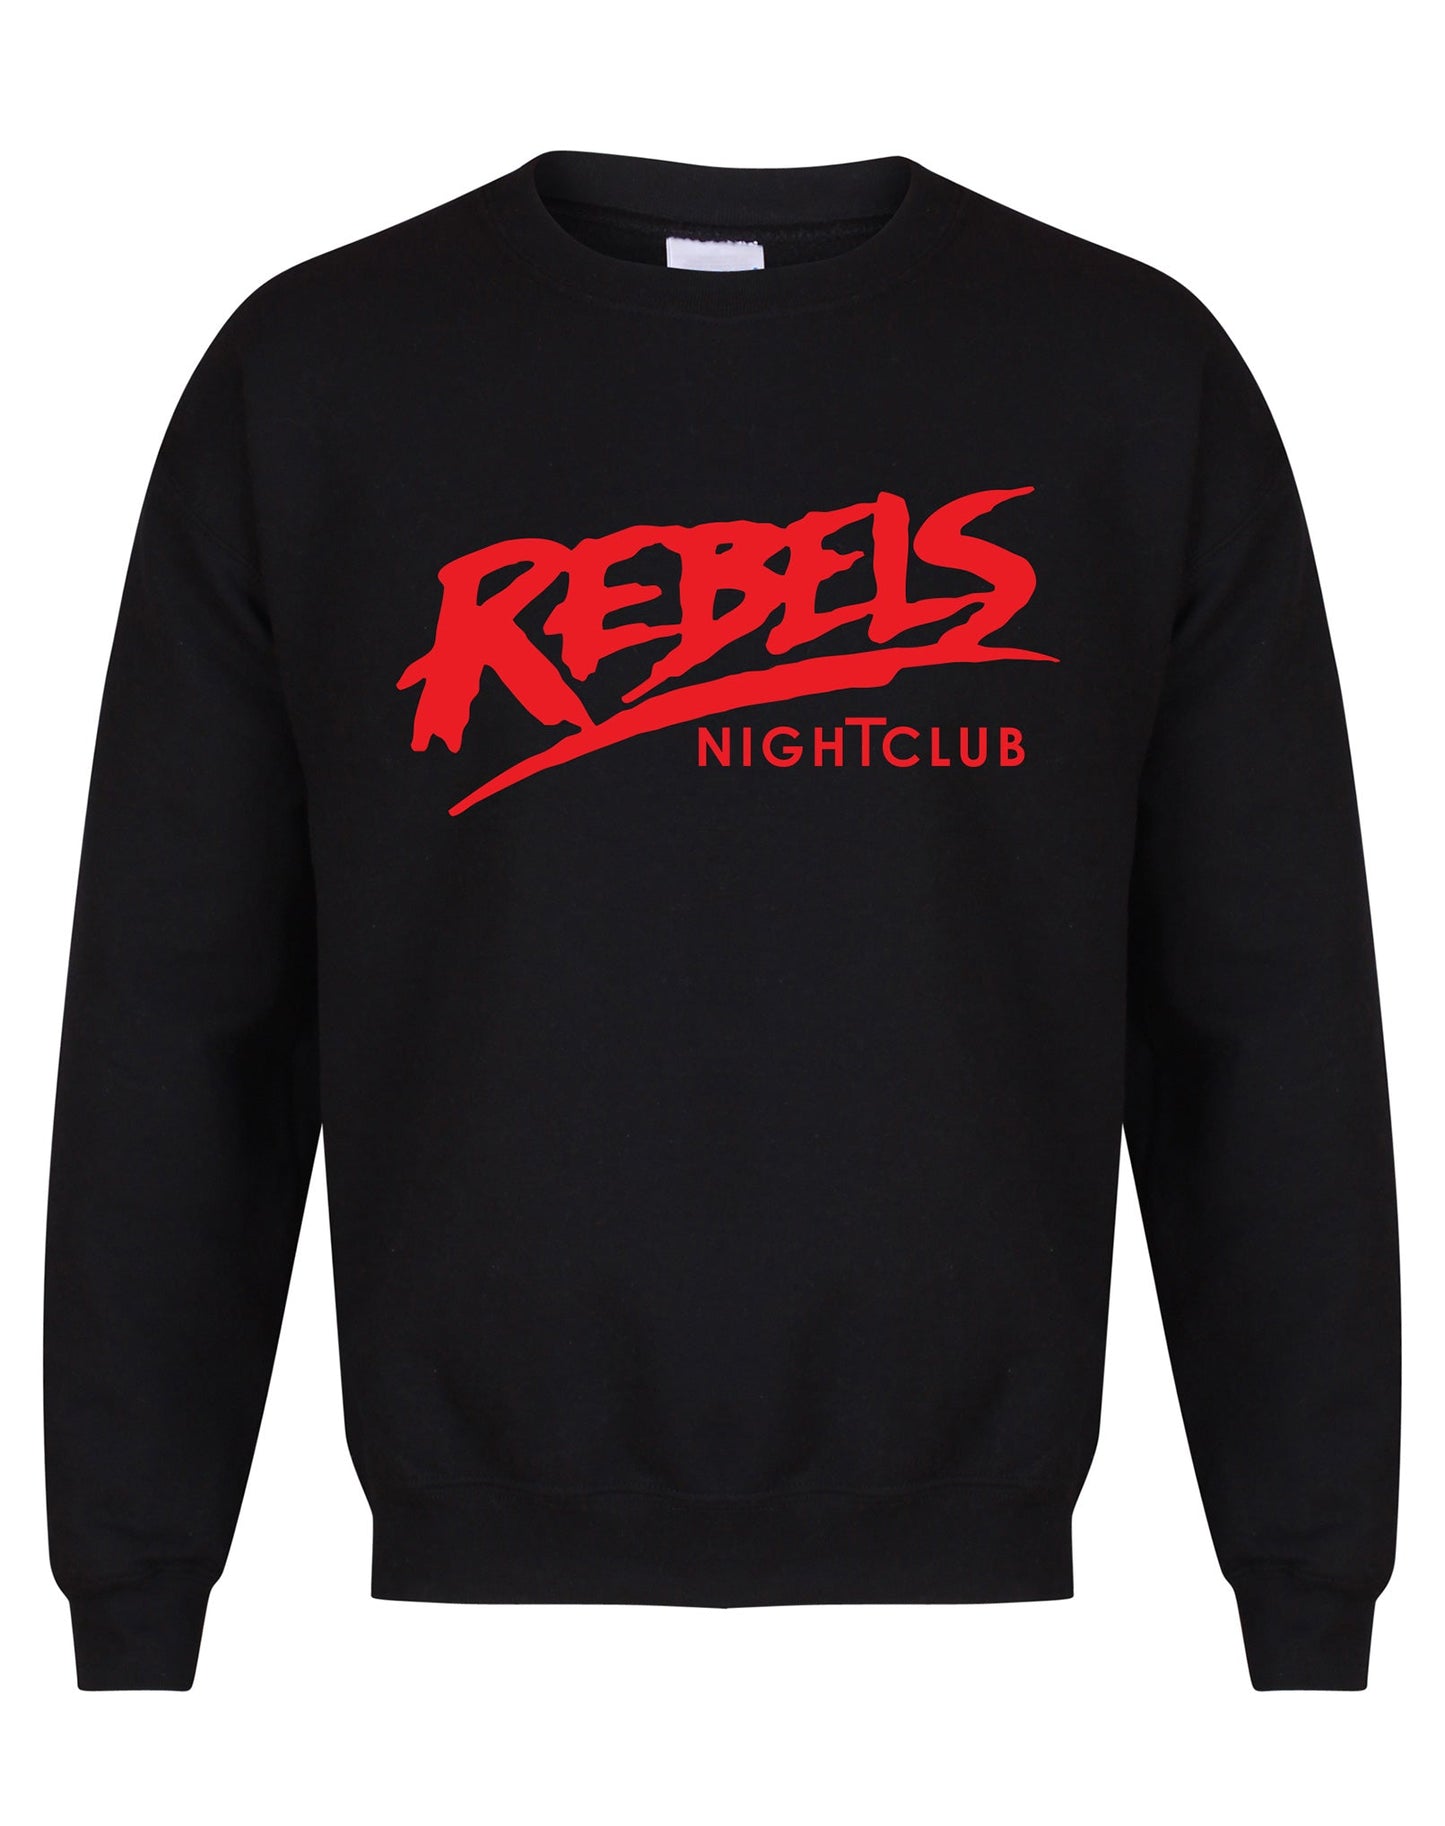 Rebels original sign unisex fit sweatshirt - various colours - Dirty Stop Outs